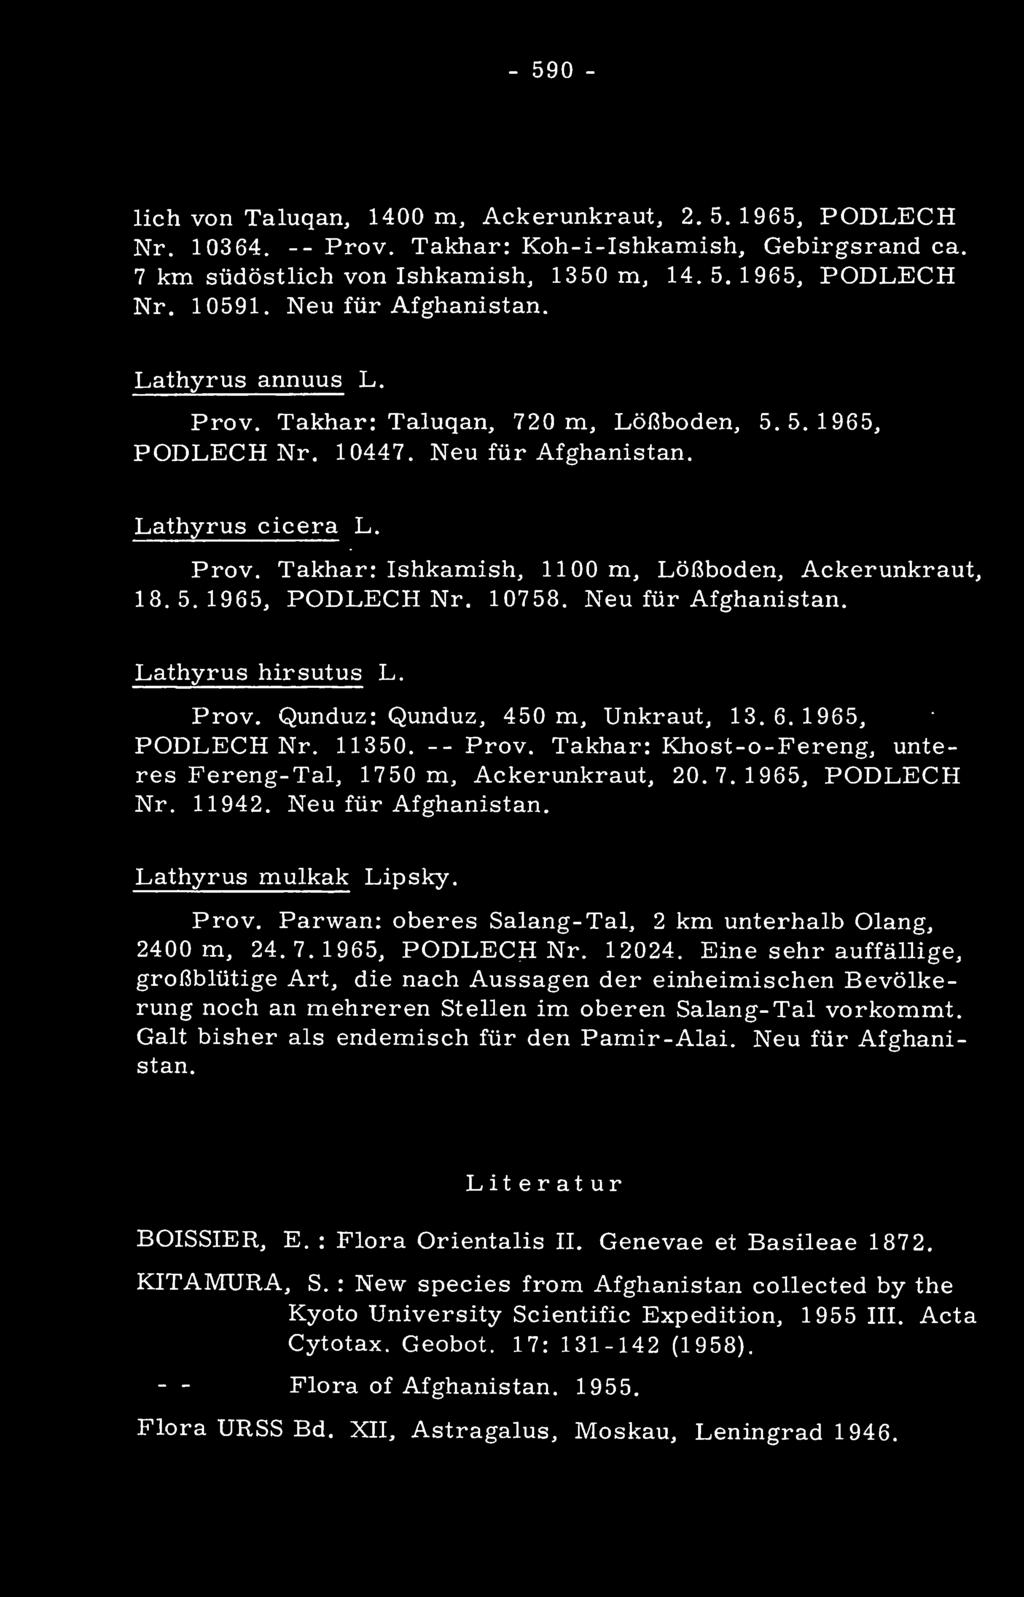 5.1965, PODLECH Nr. 10758. Neu für Afghanistan. Lathyrus hirsutus L. Prov. Qunduz: Qunduz, 450 m, Unkraut, 13.6.1965, PODLECH Nr. 11350. --Prov.